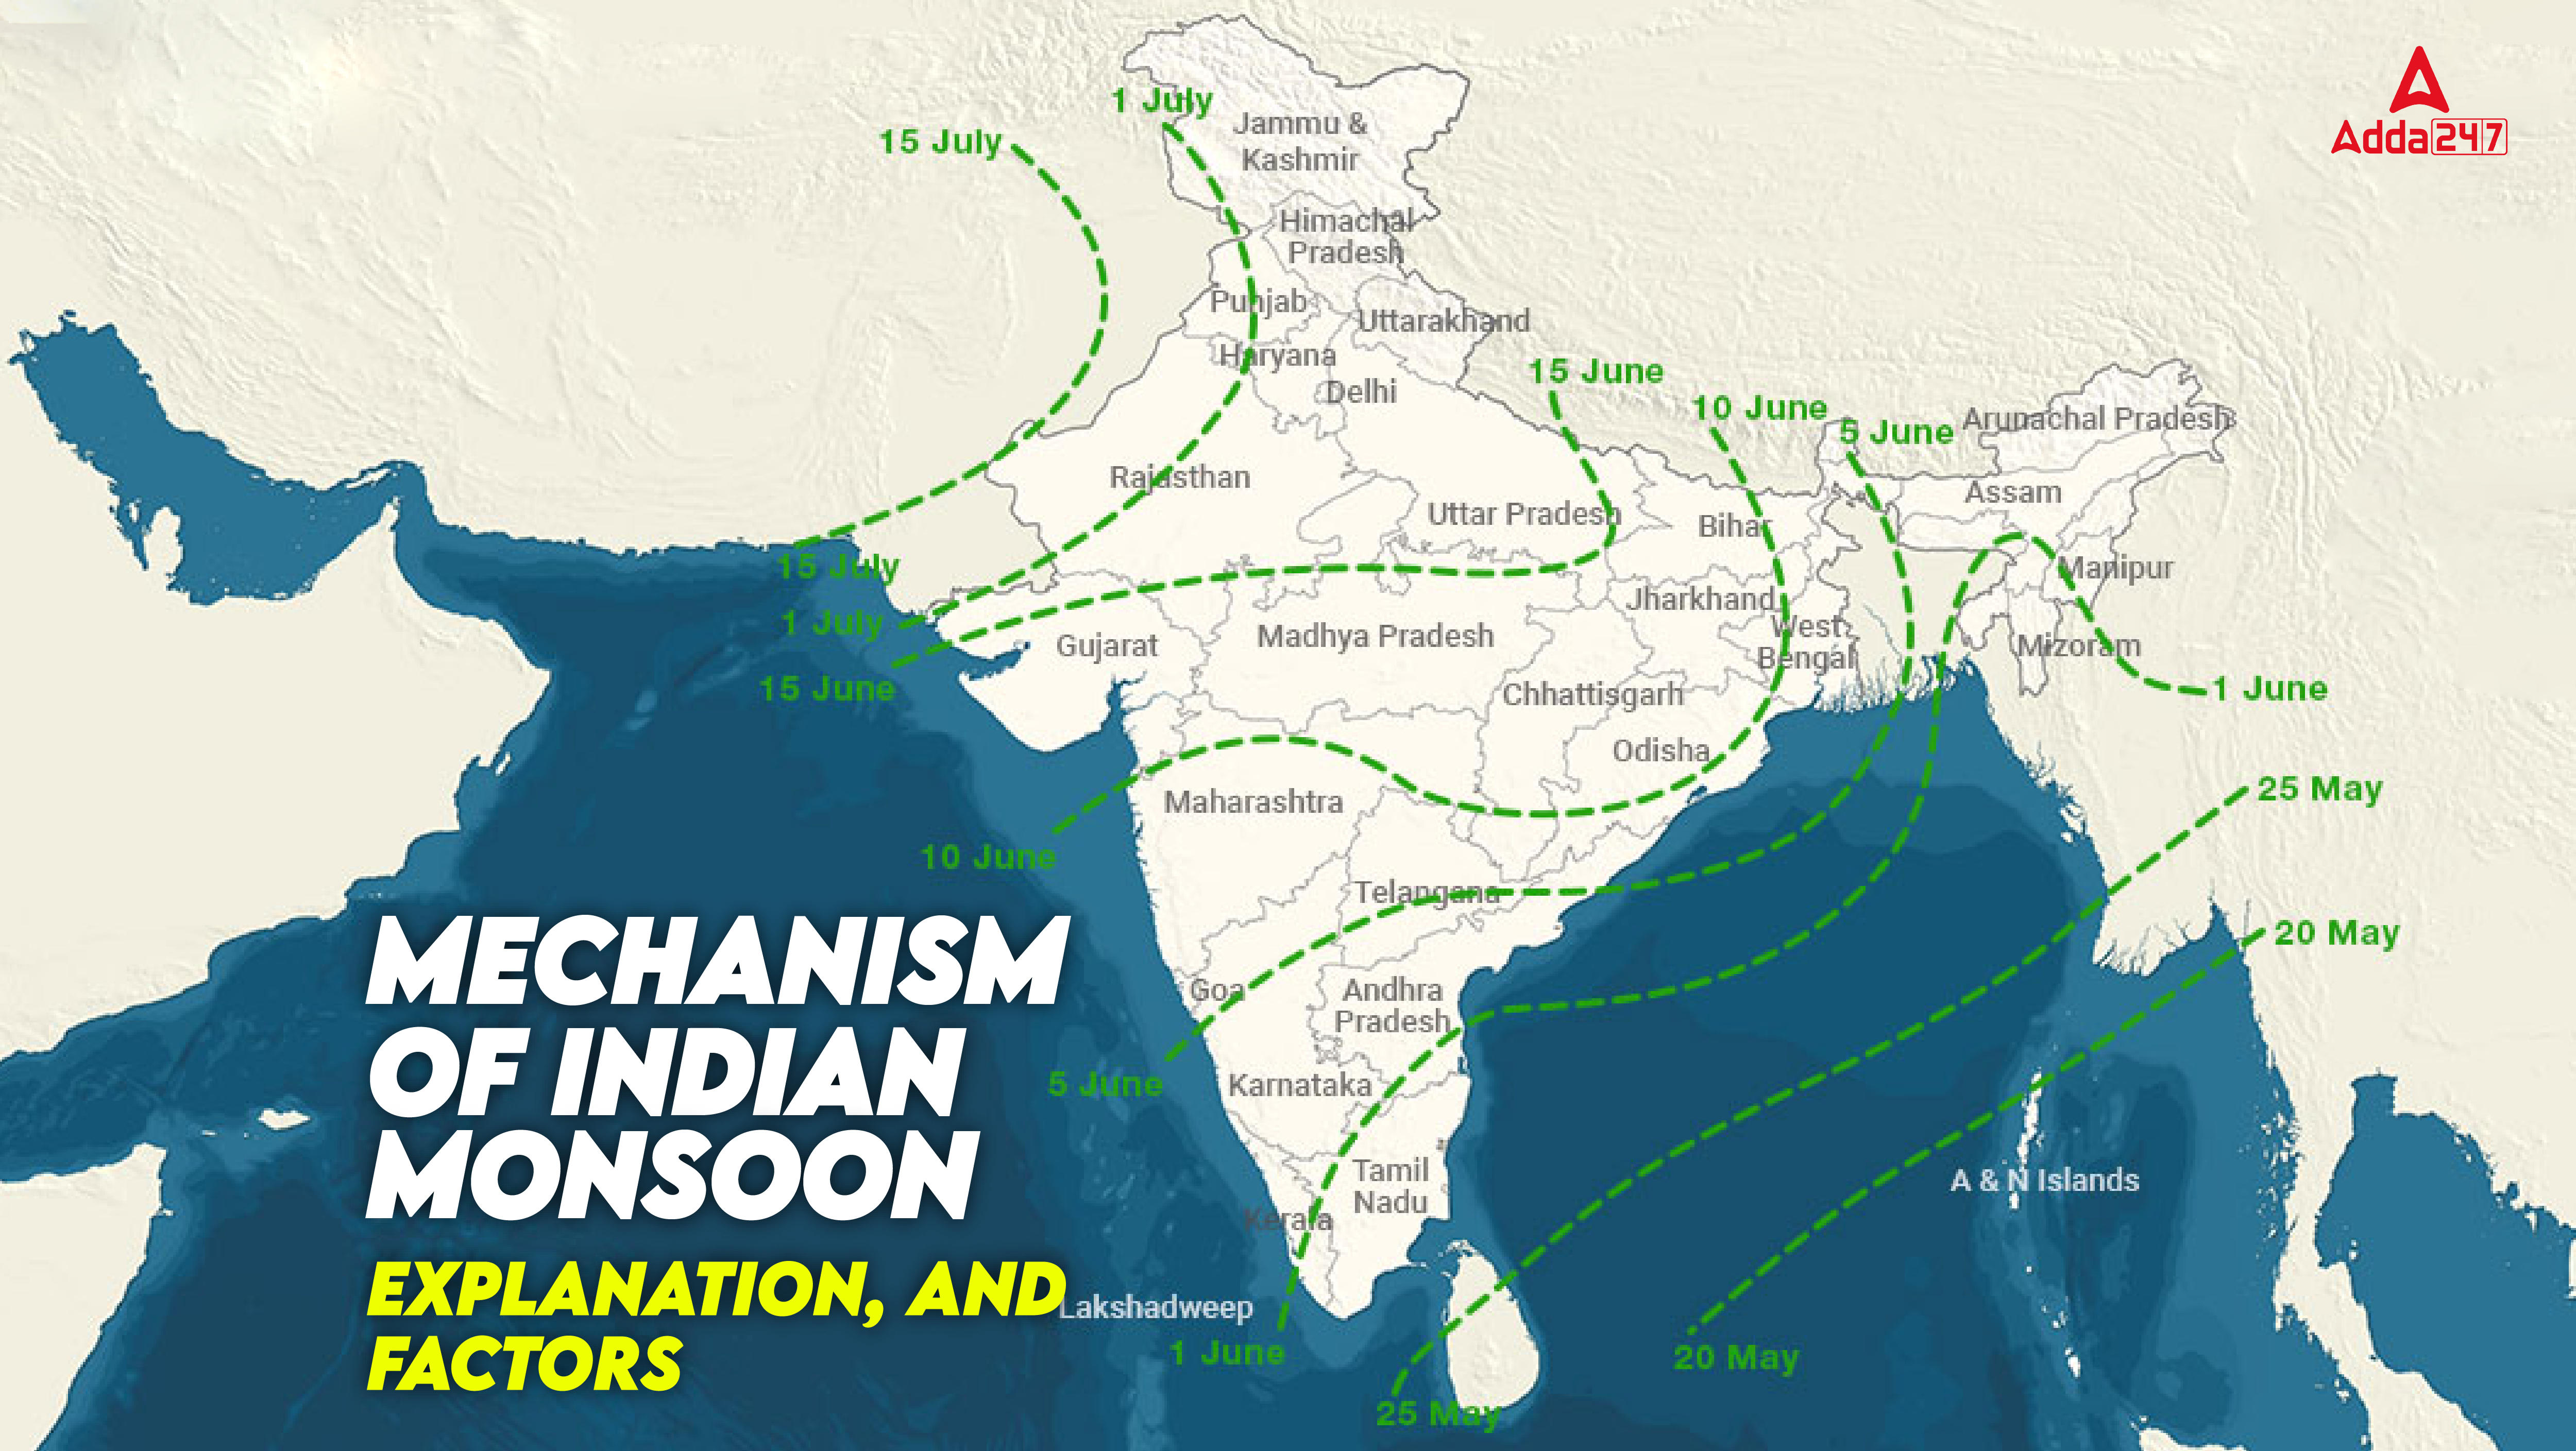 Mechanism of Indian Monsoon, Explanation, Factors